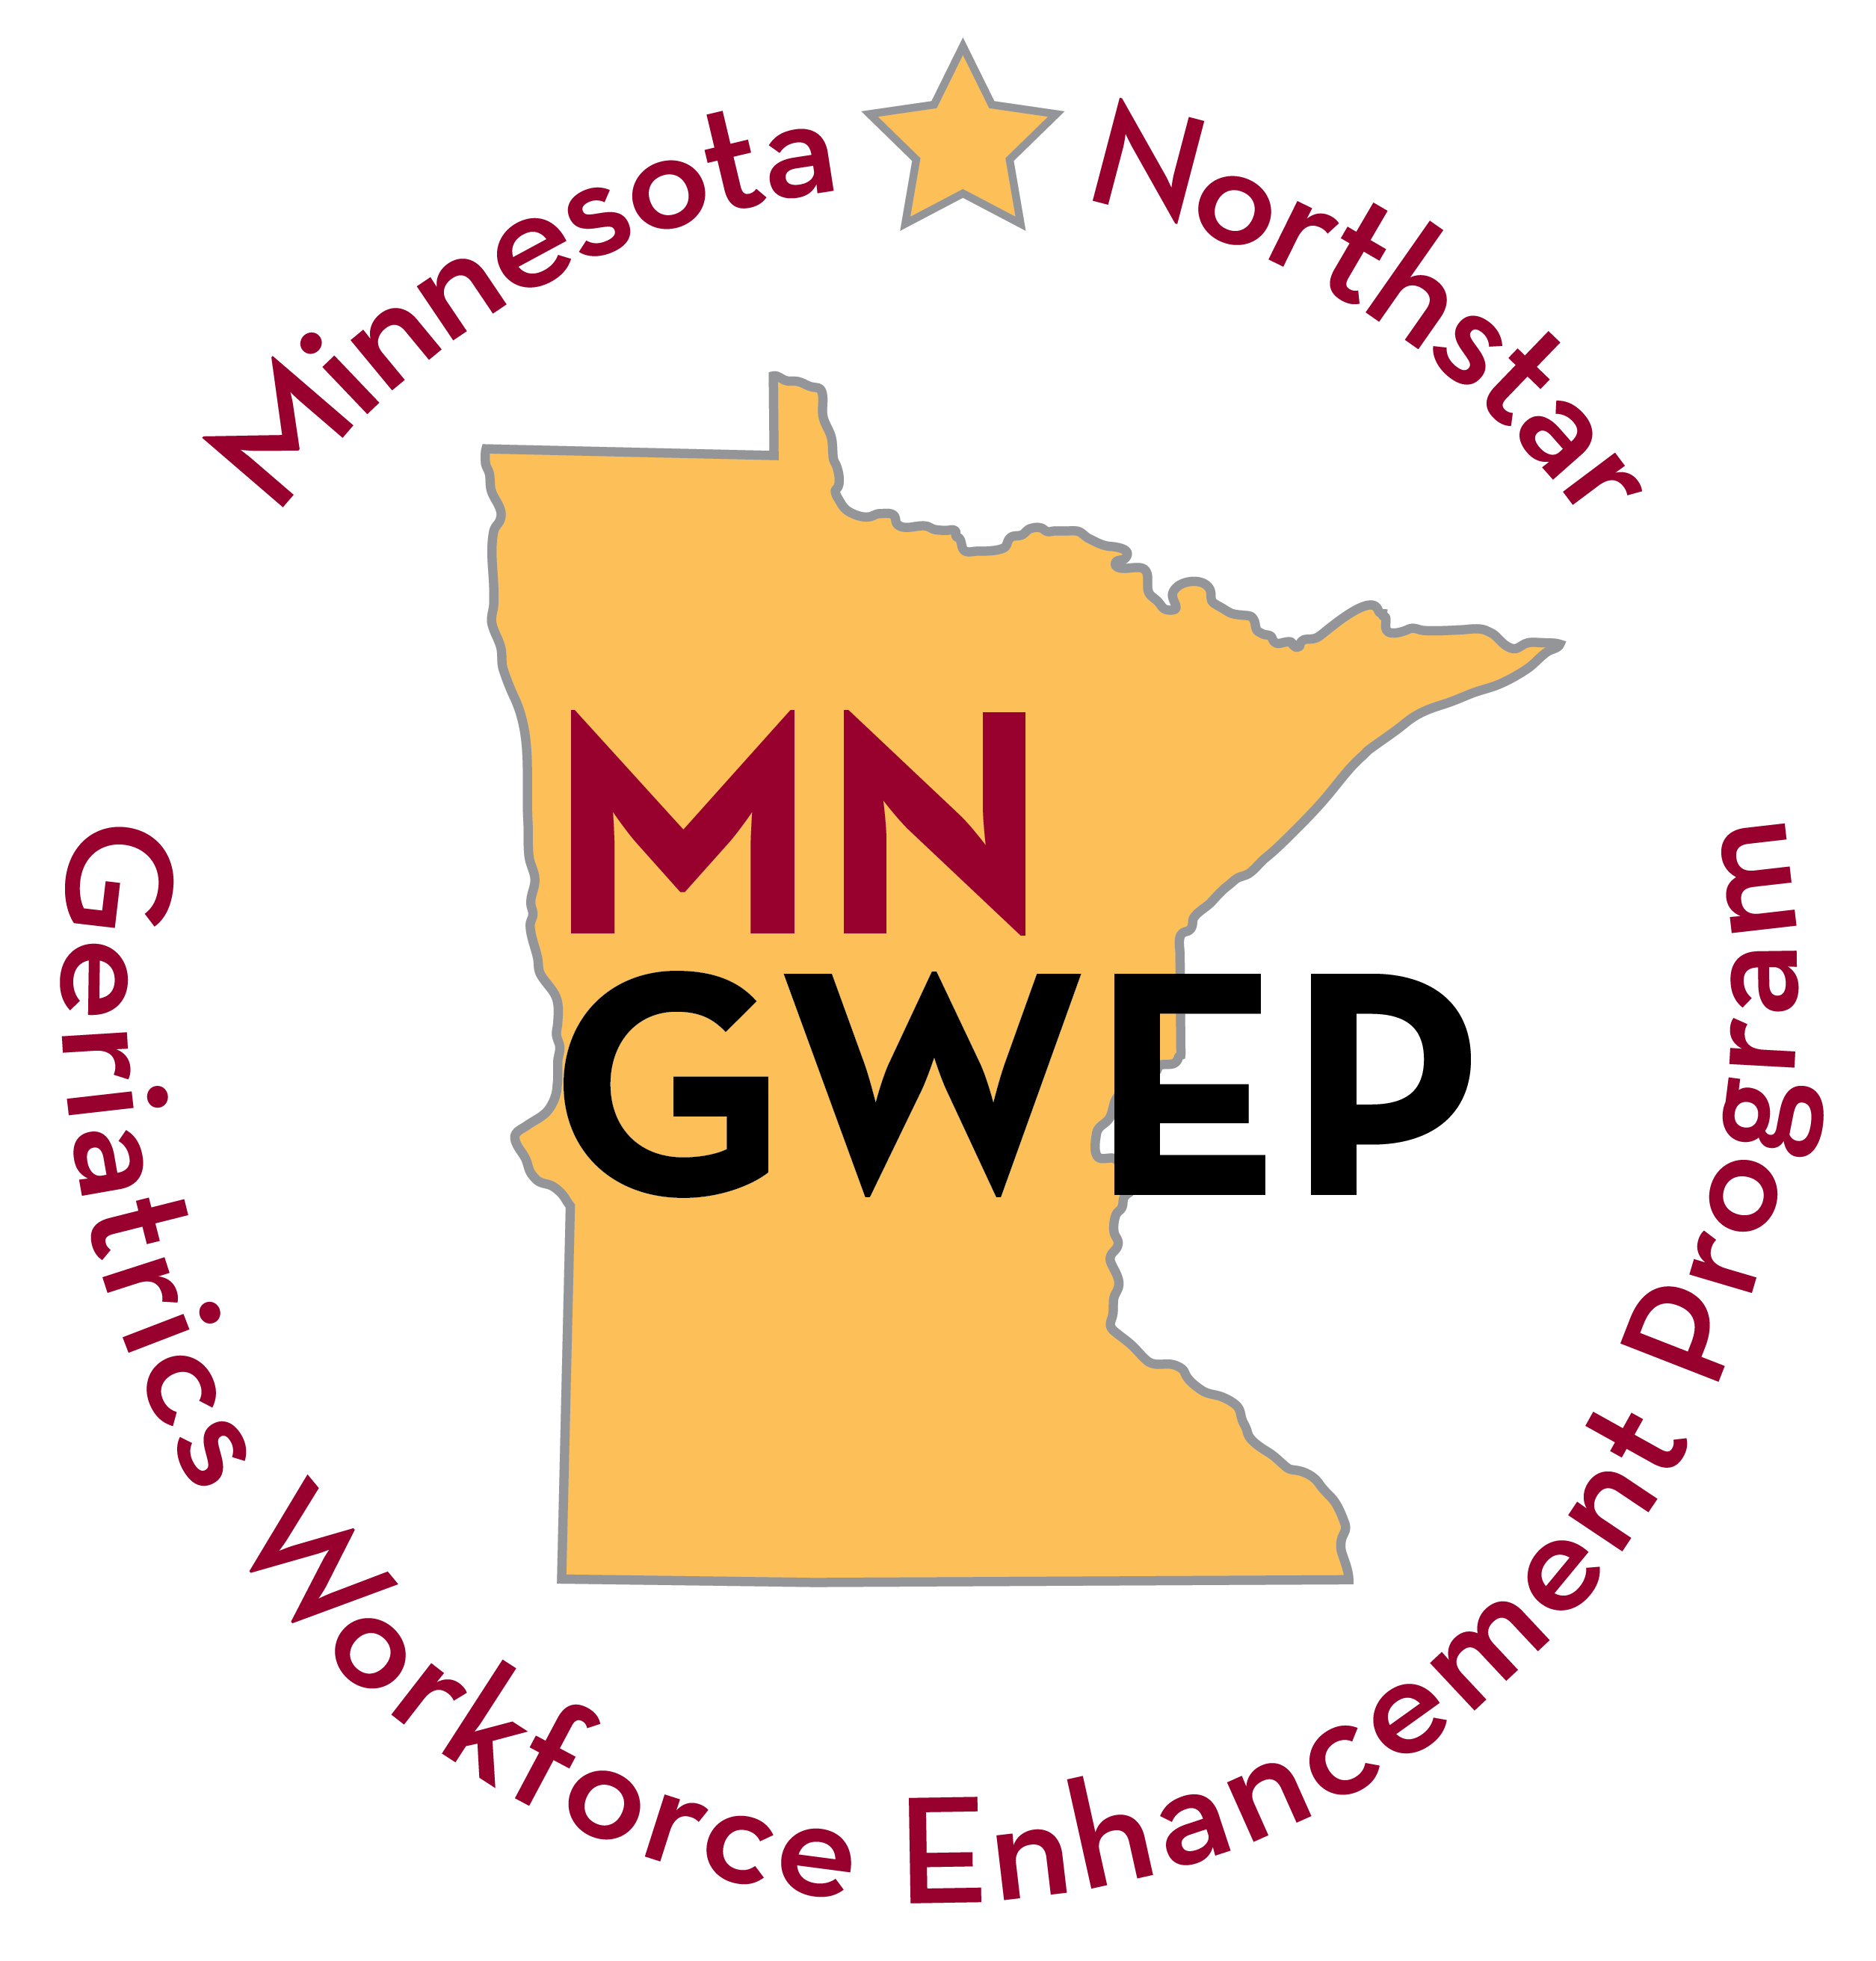 Minnesota Northstar Geriatrics Workforce Enhancement Program Logo